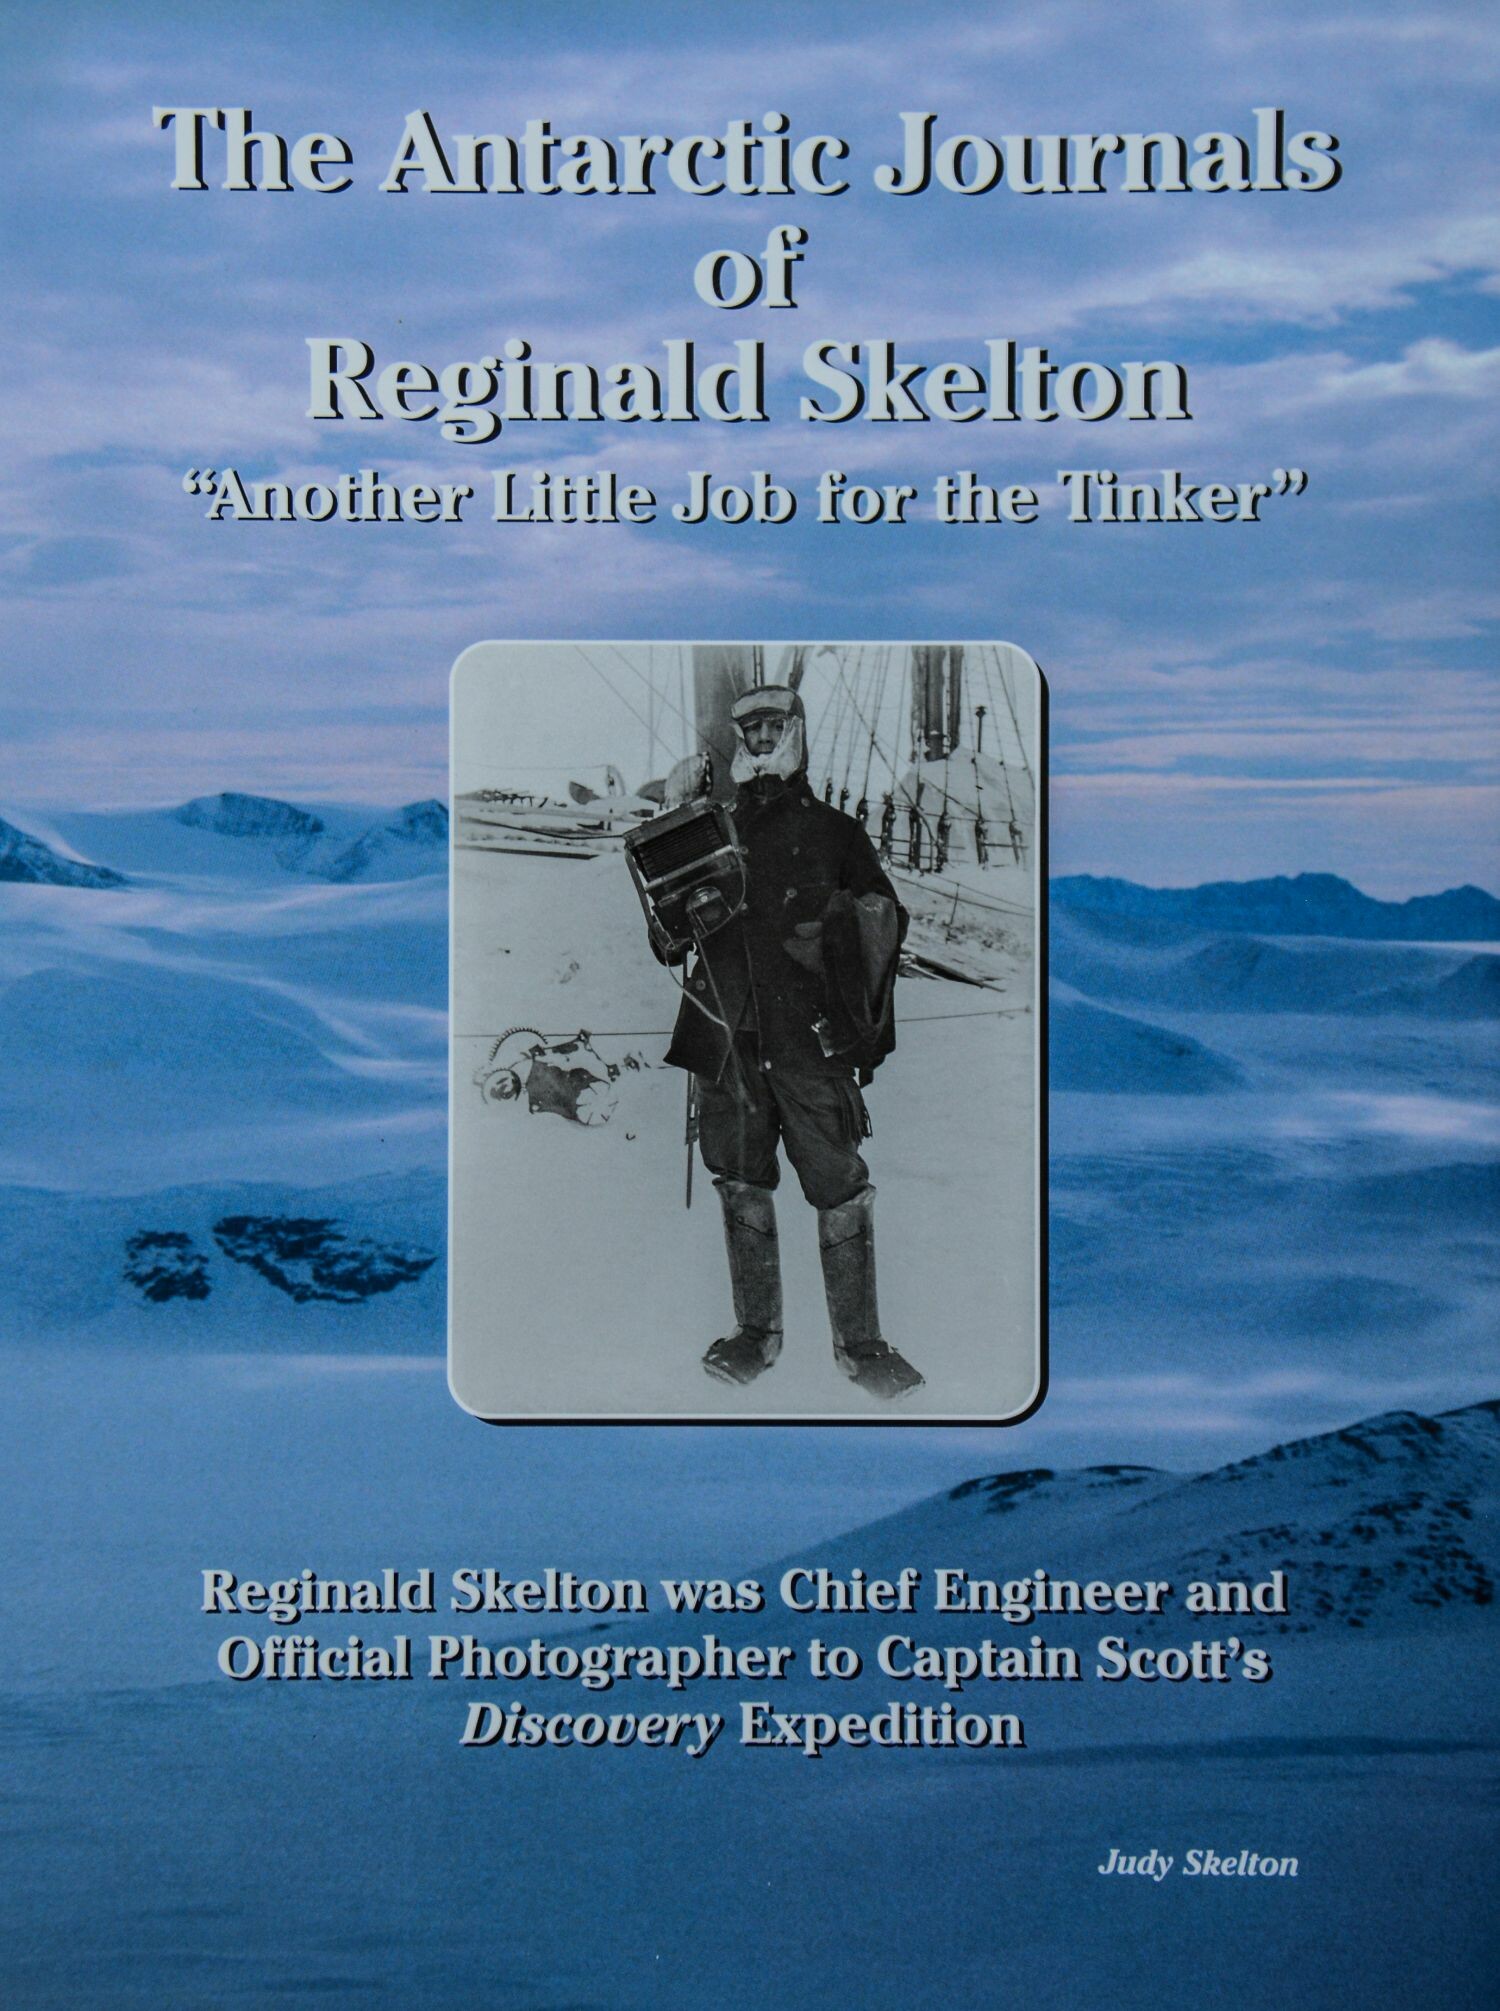 The Antartic Journals of Reginald Skelton